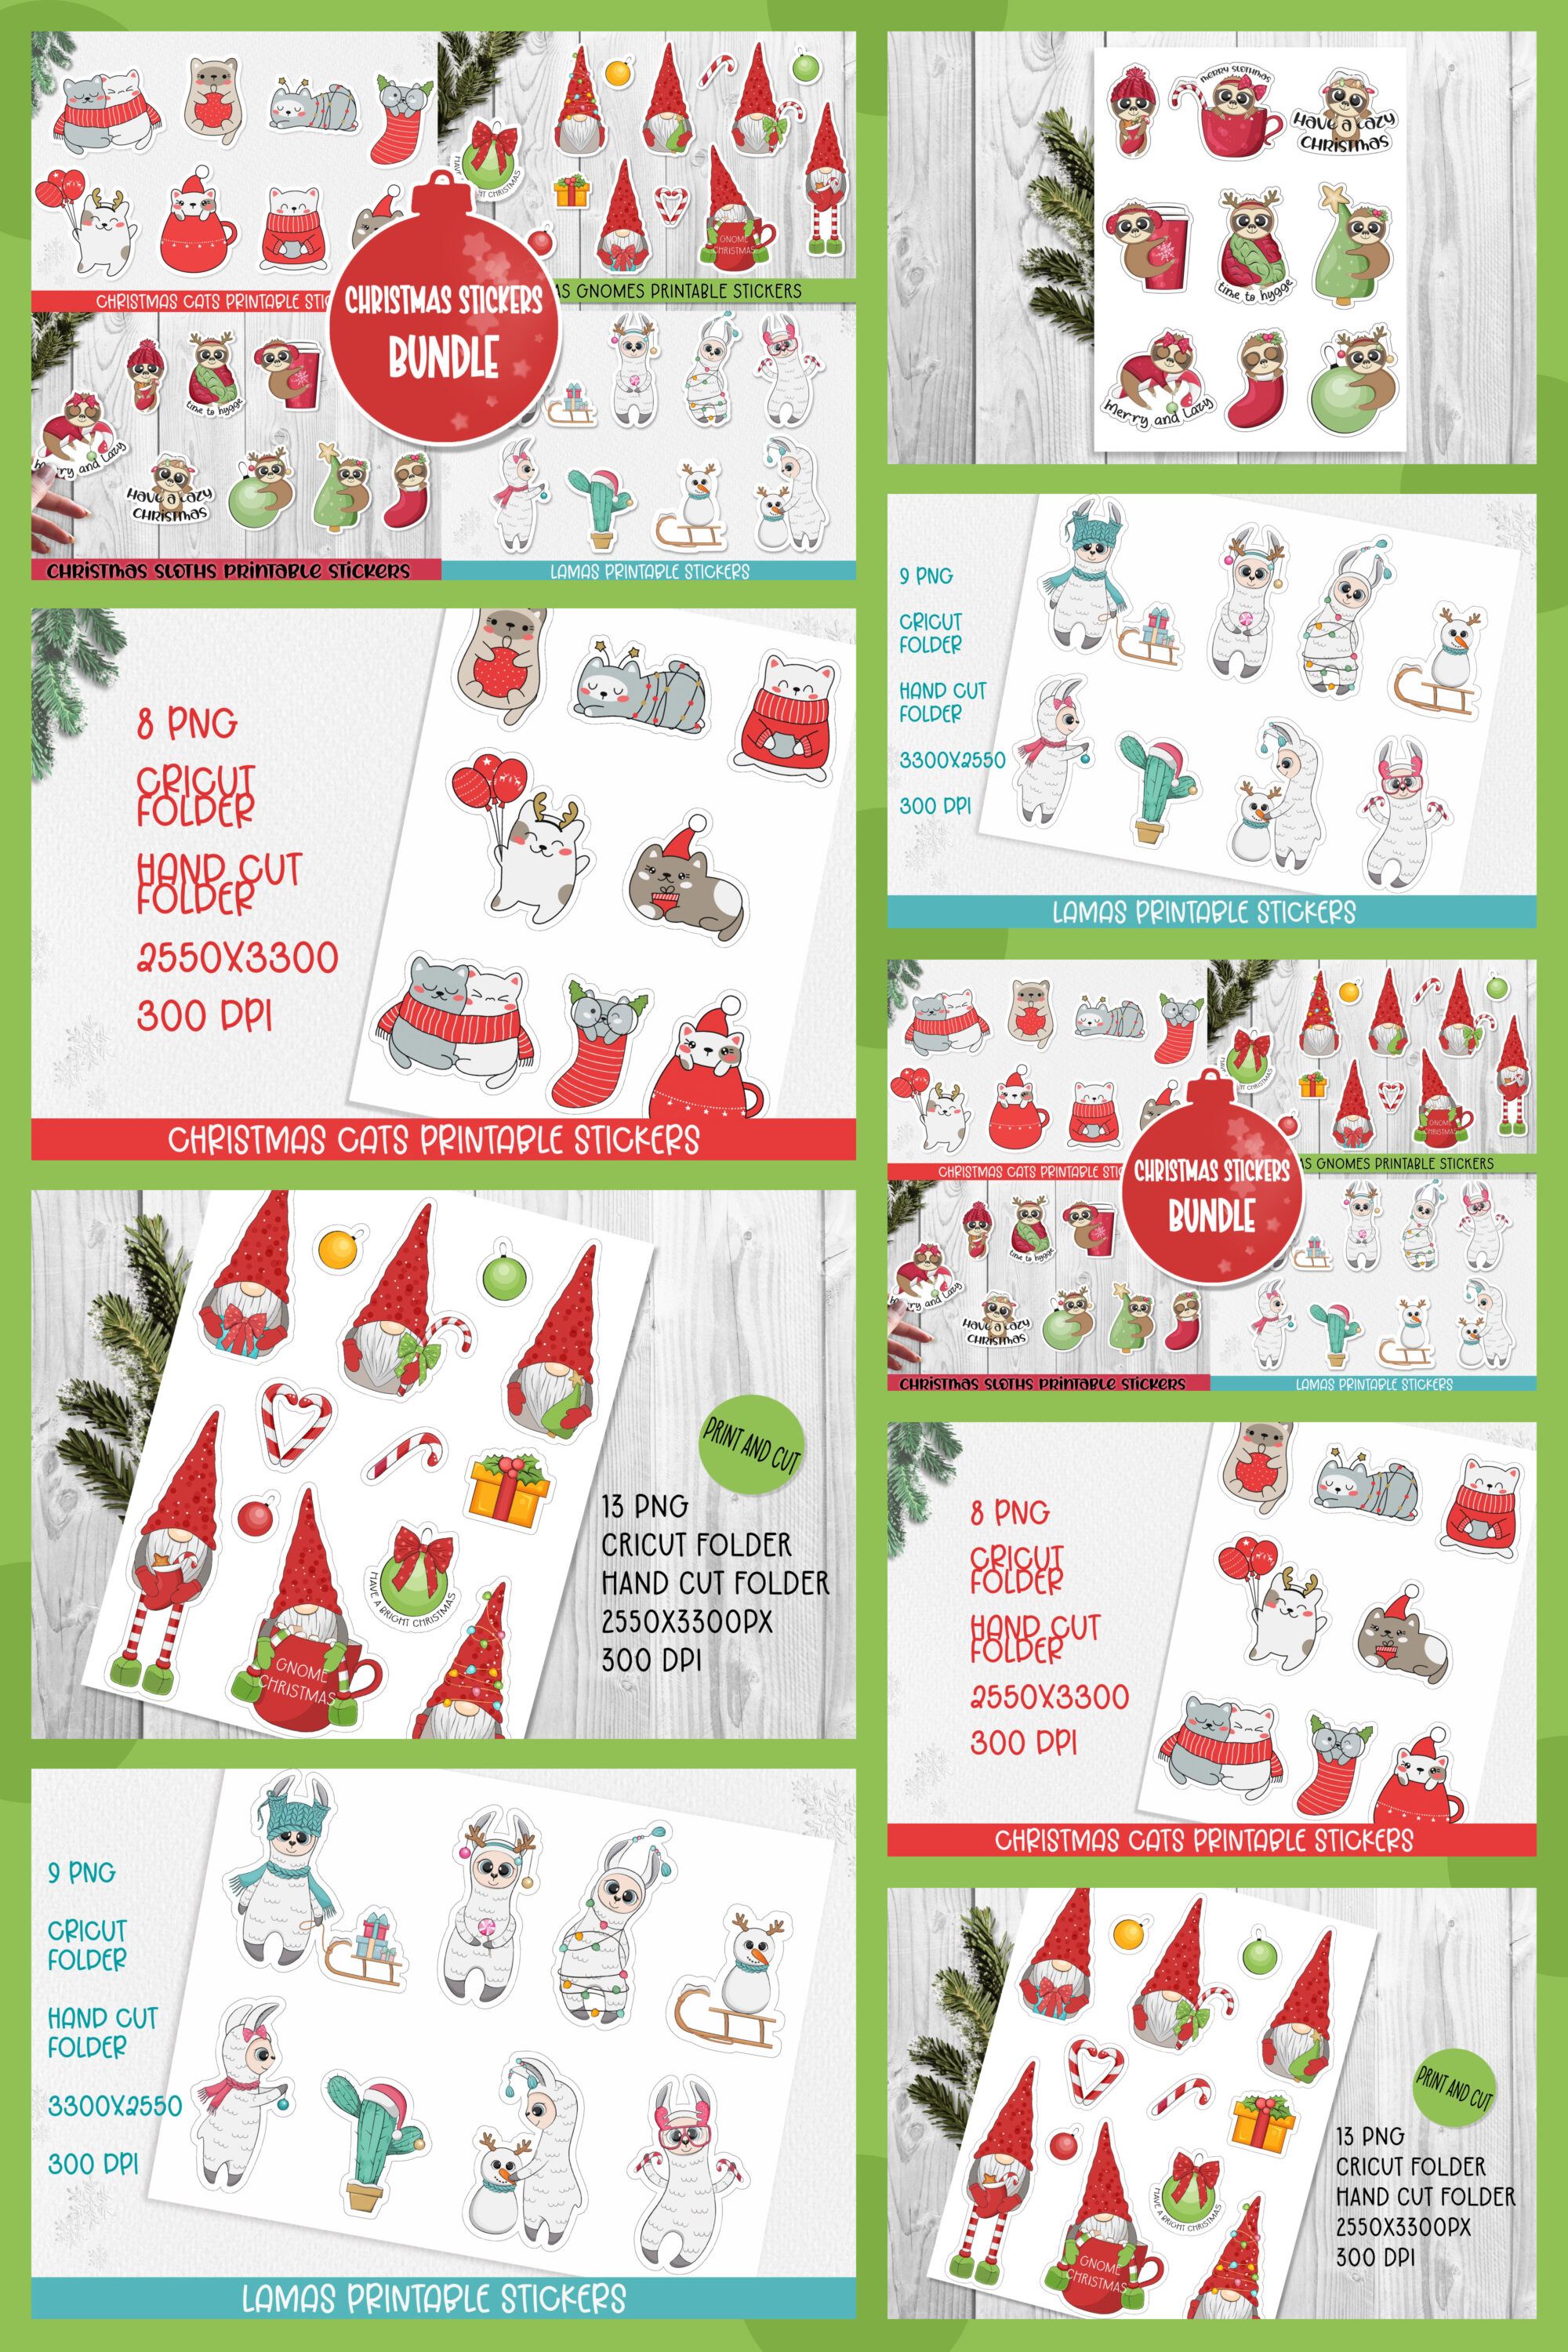 Christmas stickers bundle of pinterest.